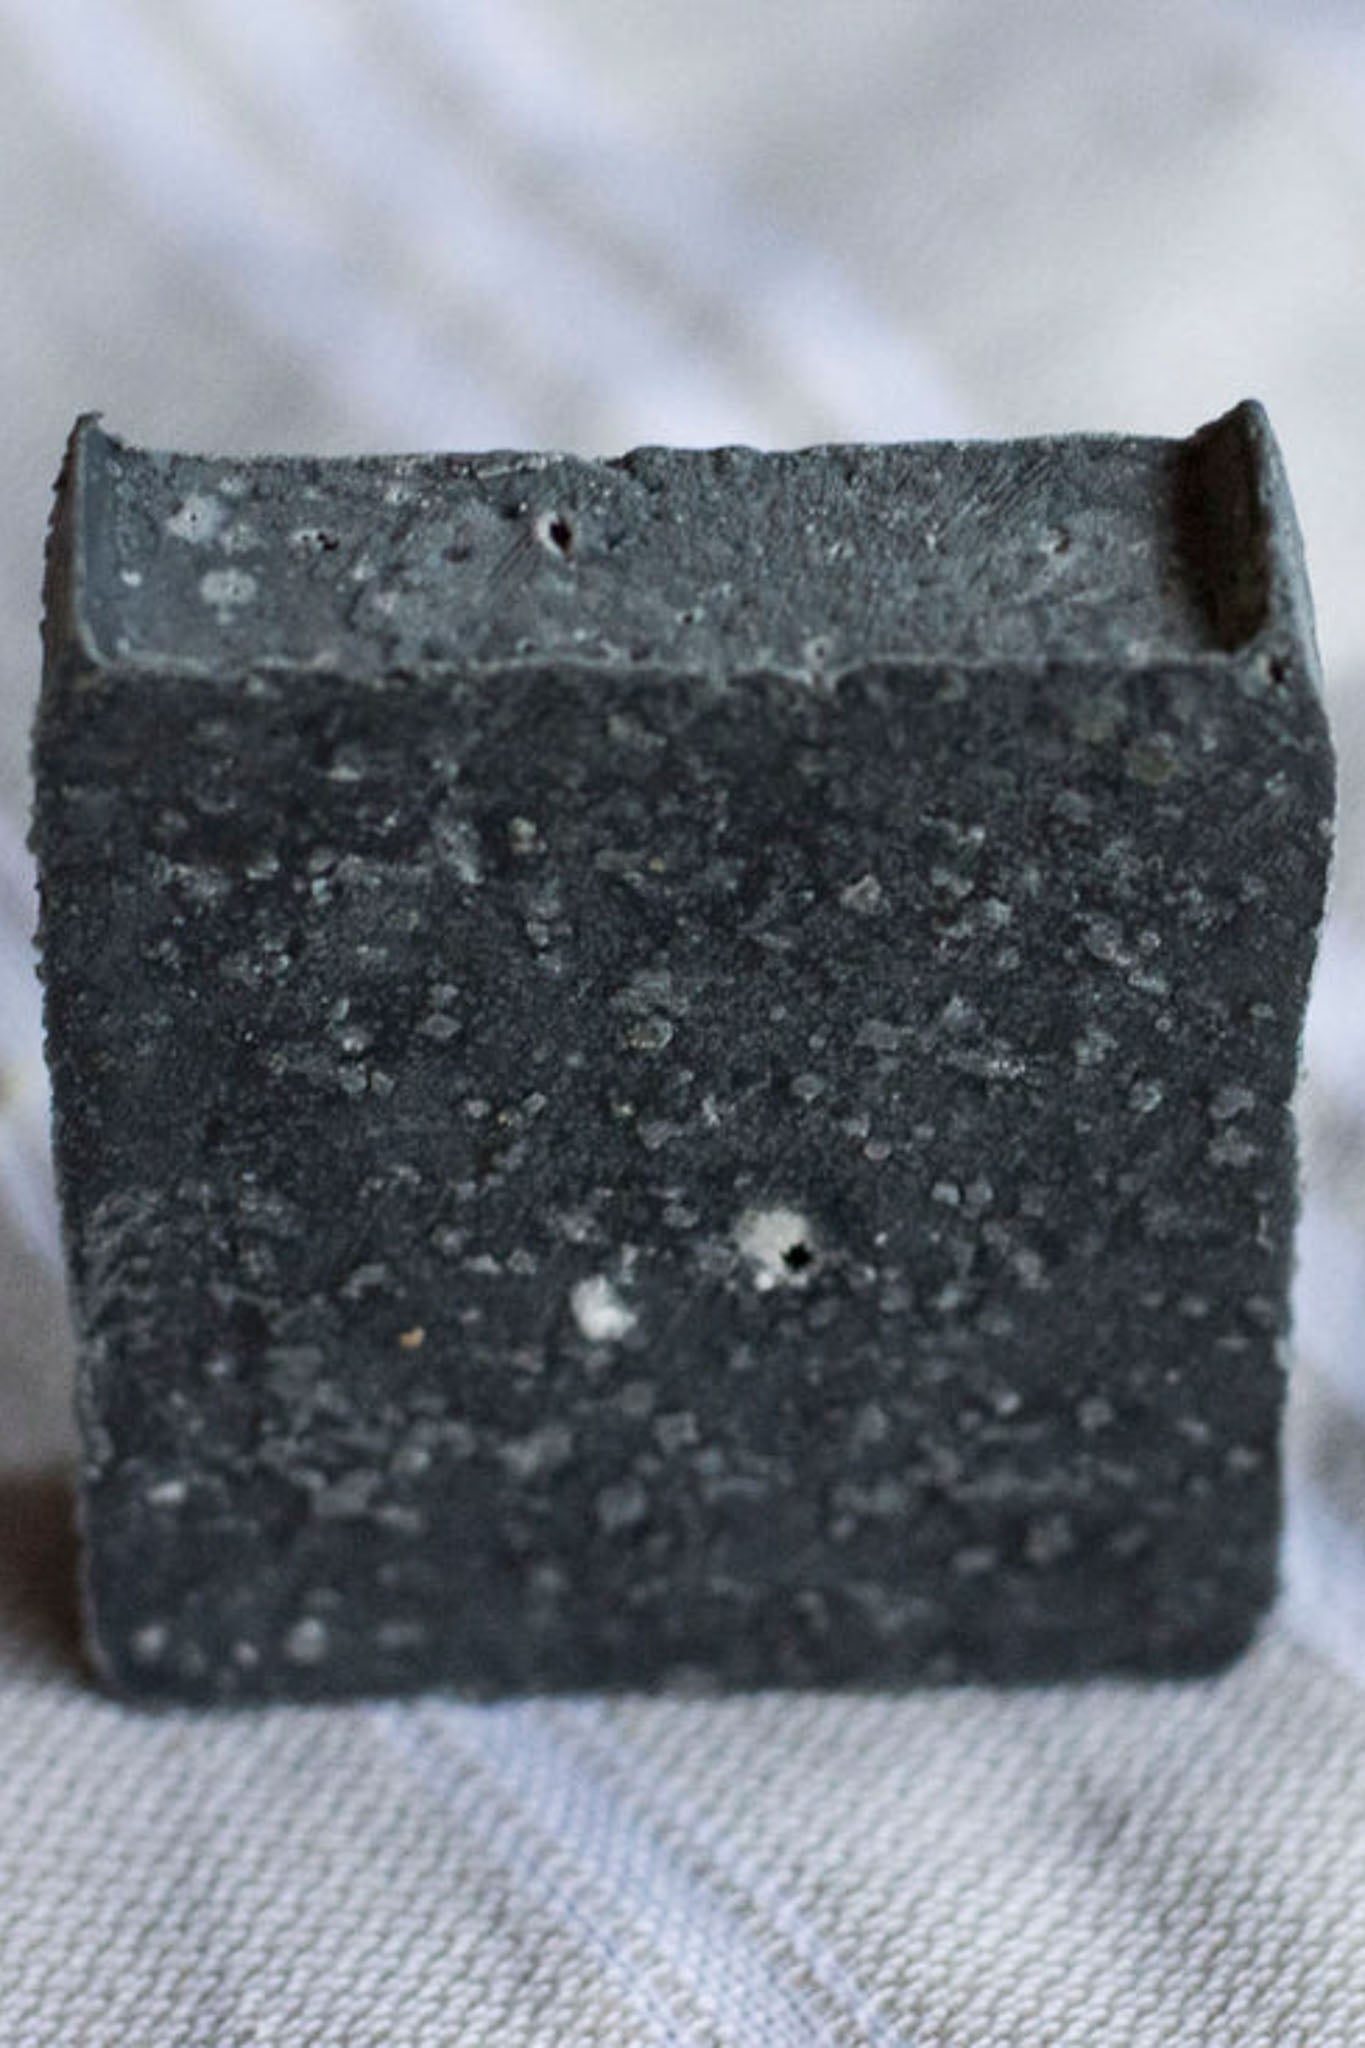 Charcoal & Lava Rocks Soap